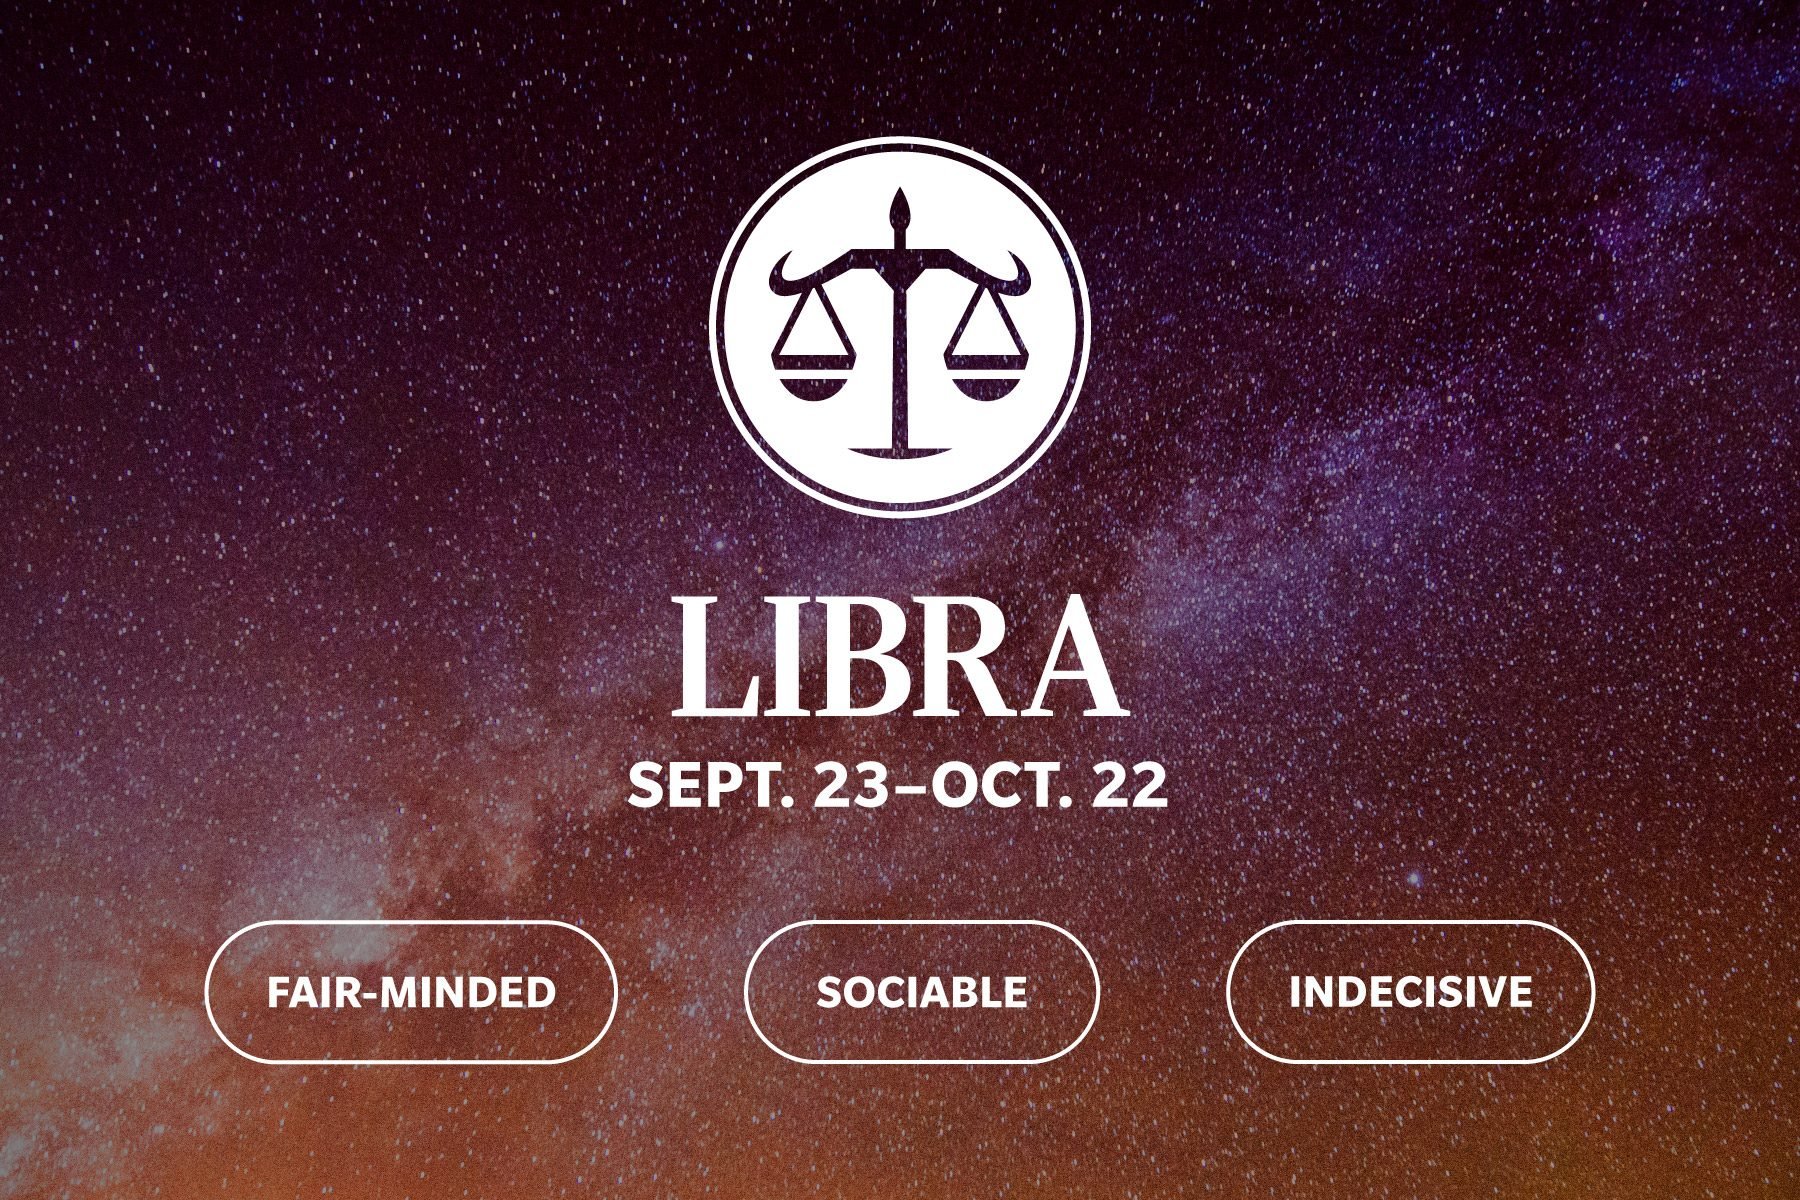 Zodiac sign qualities on galaxy background libra